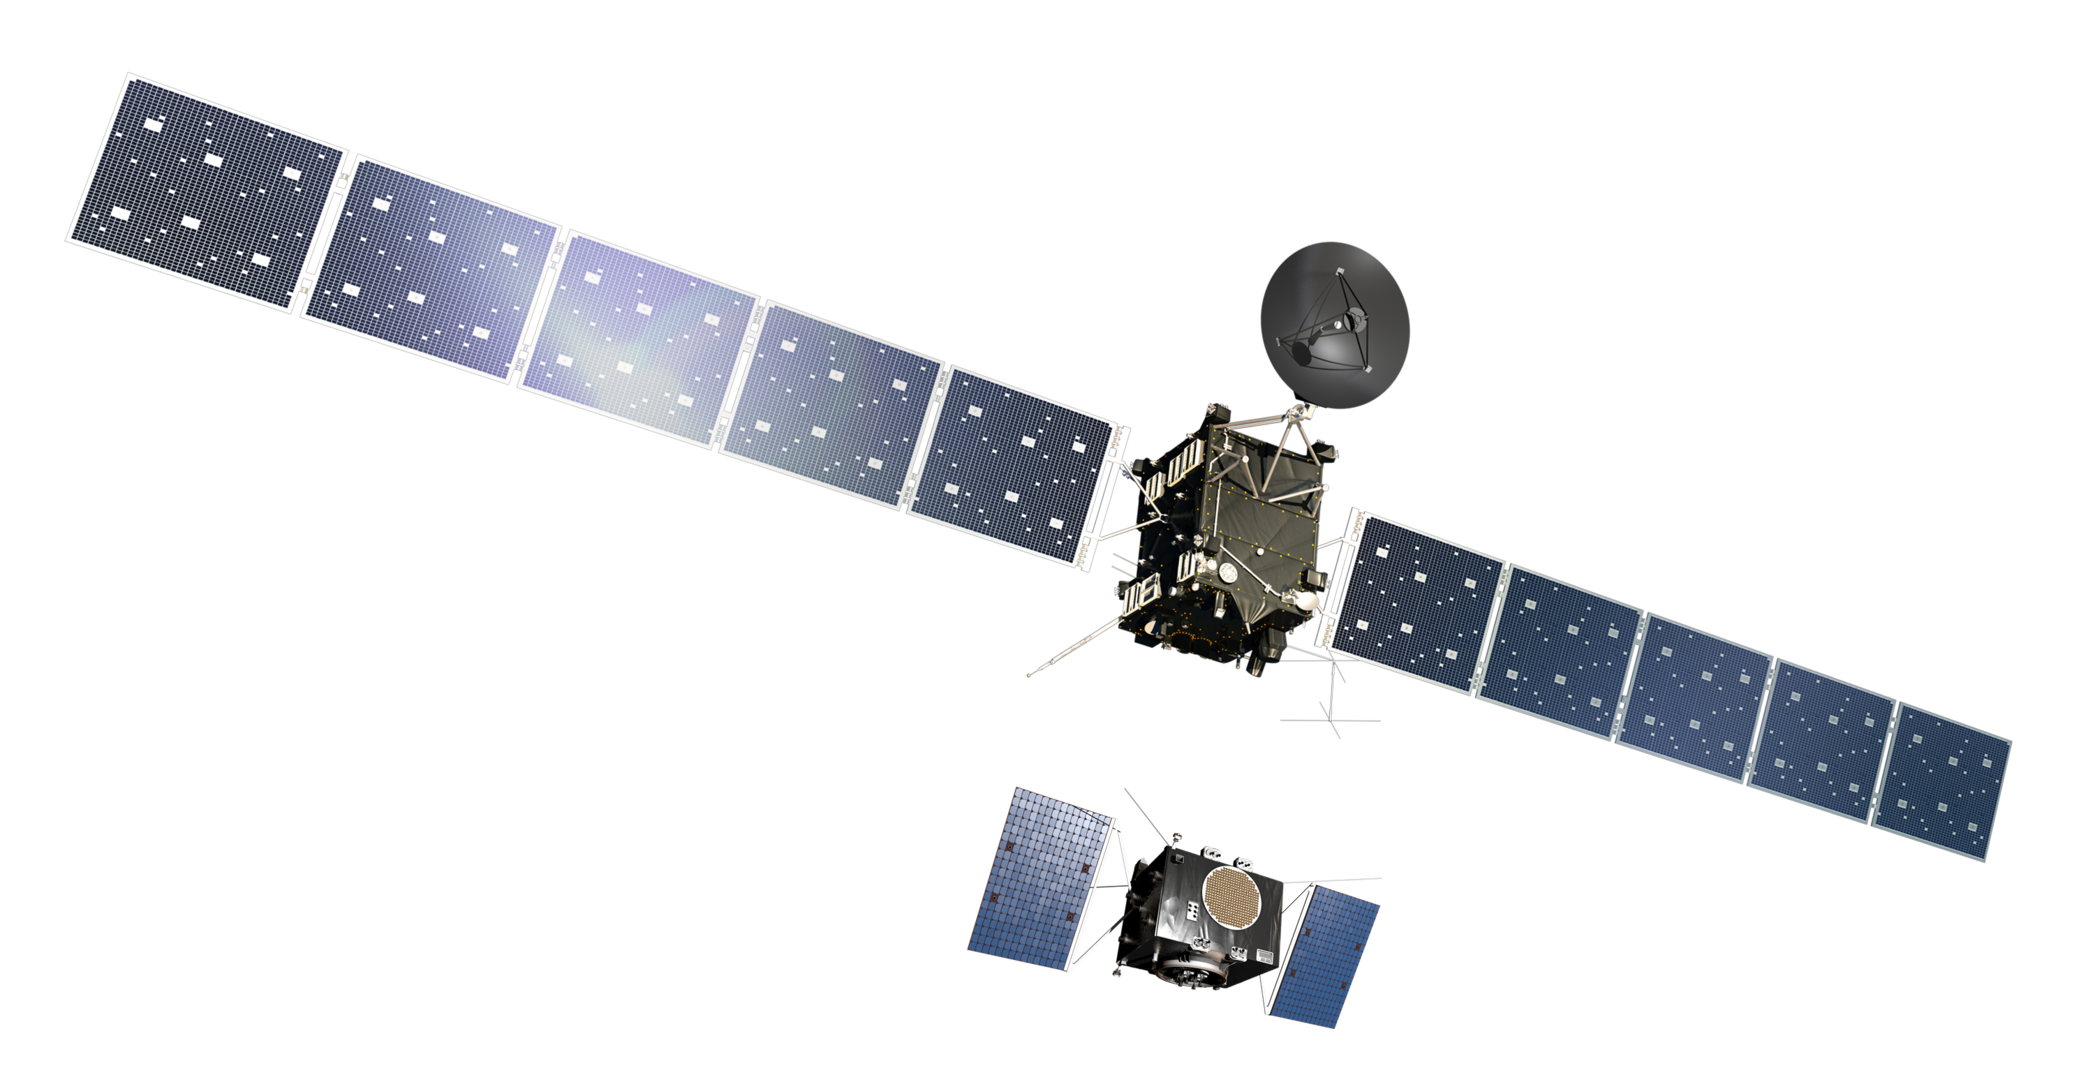 Comparison of Rosetta vs AIM spacecraft in size